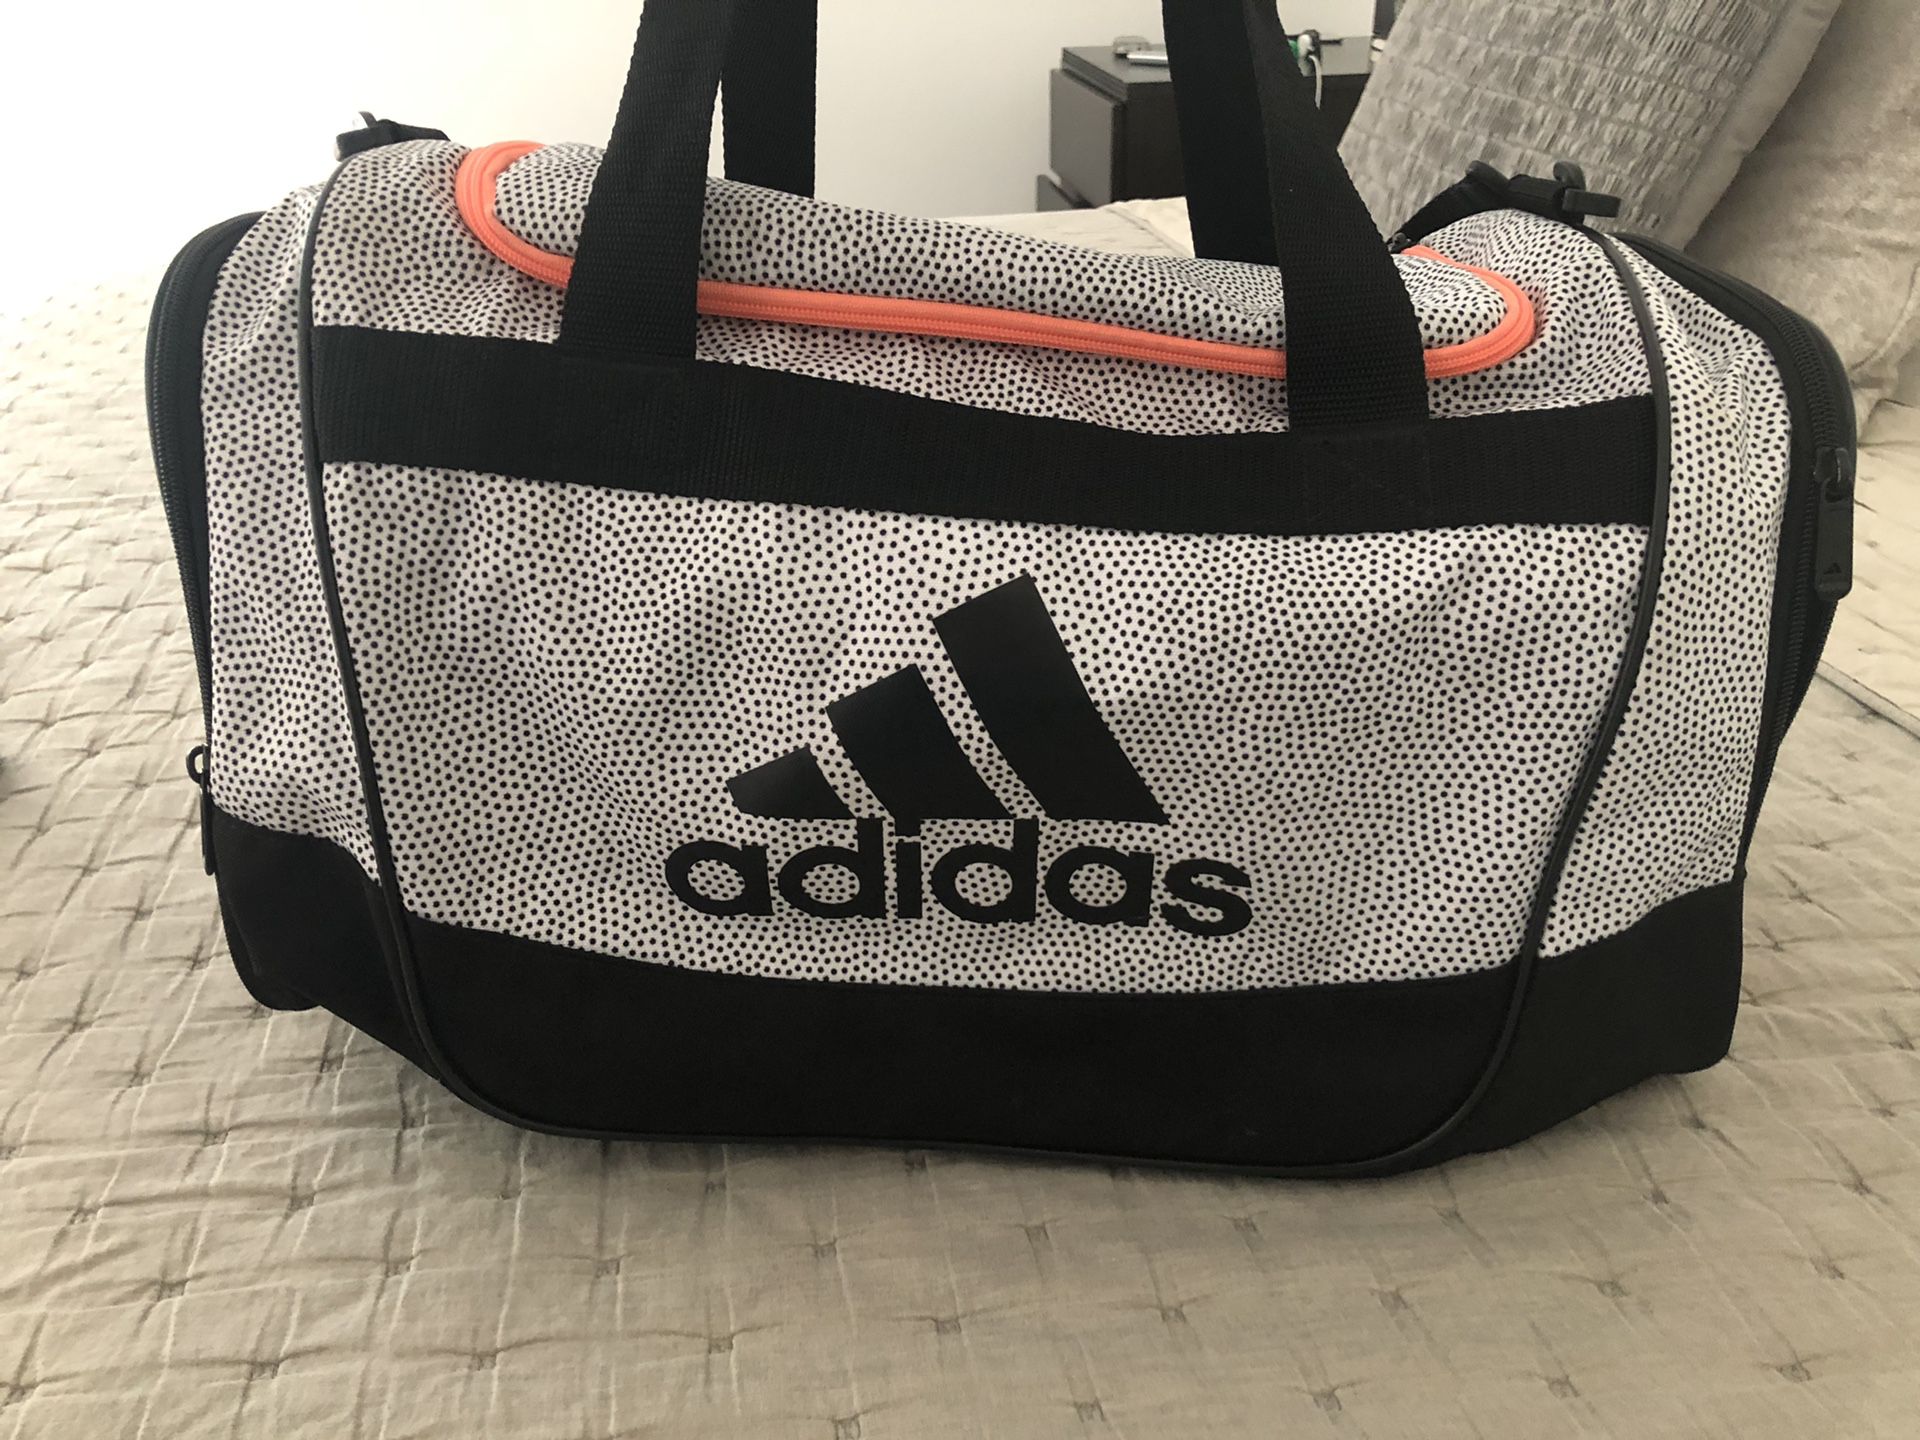 Adidas duffle bag- NEW